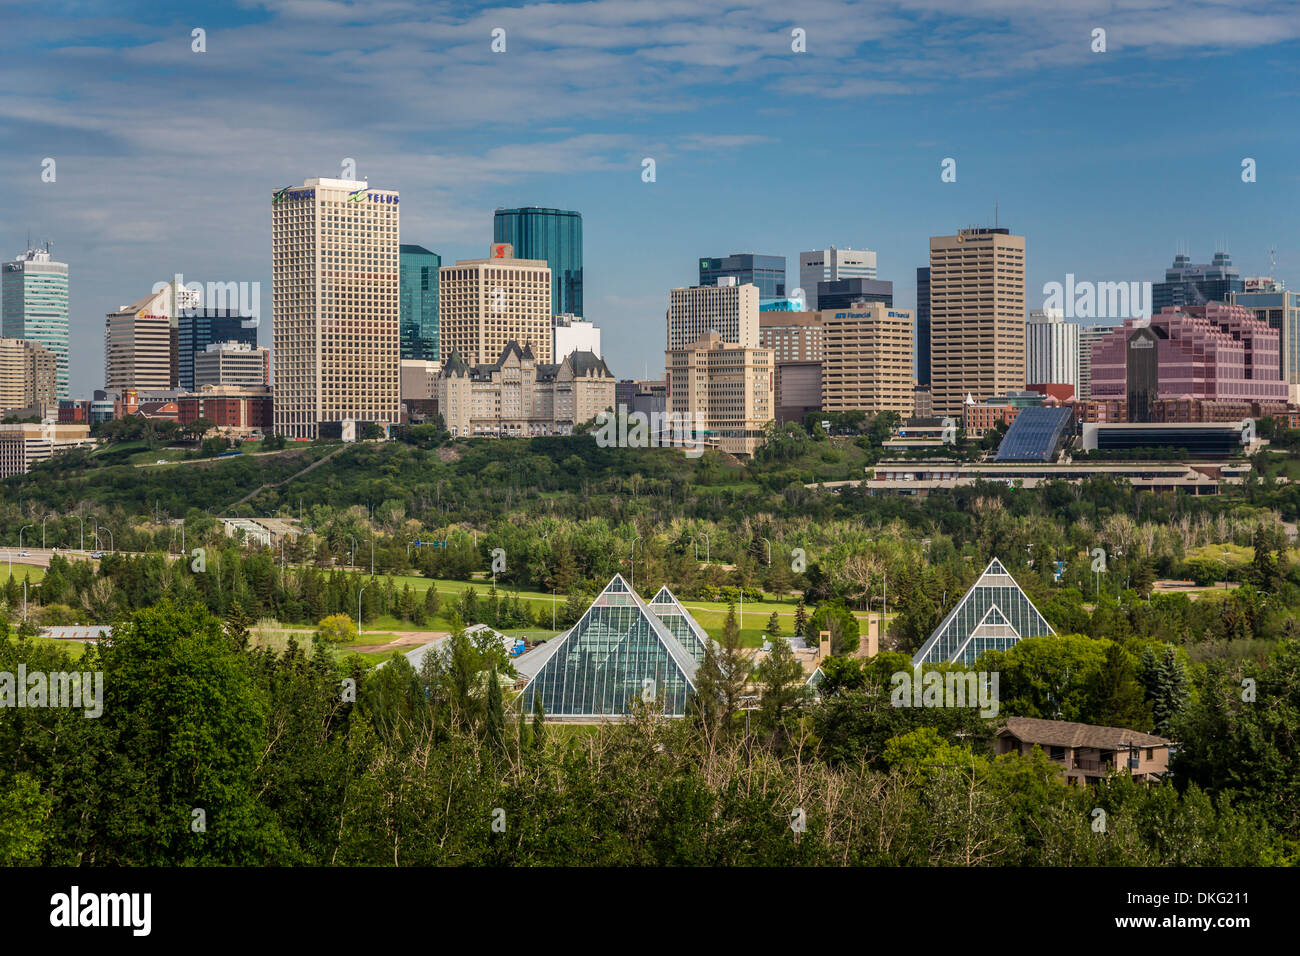 The city skyline from above the Muttart Conservatory in Edmonton, Alberta, Canada. Stock Photo